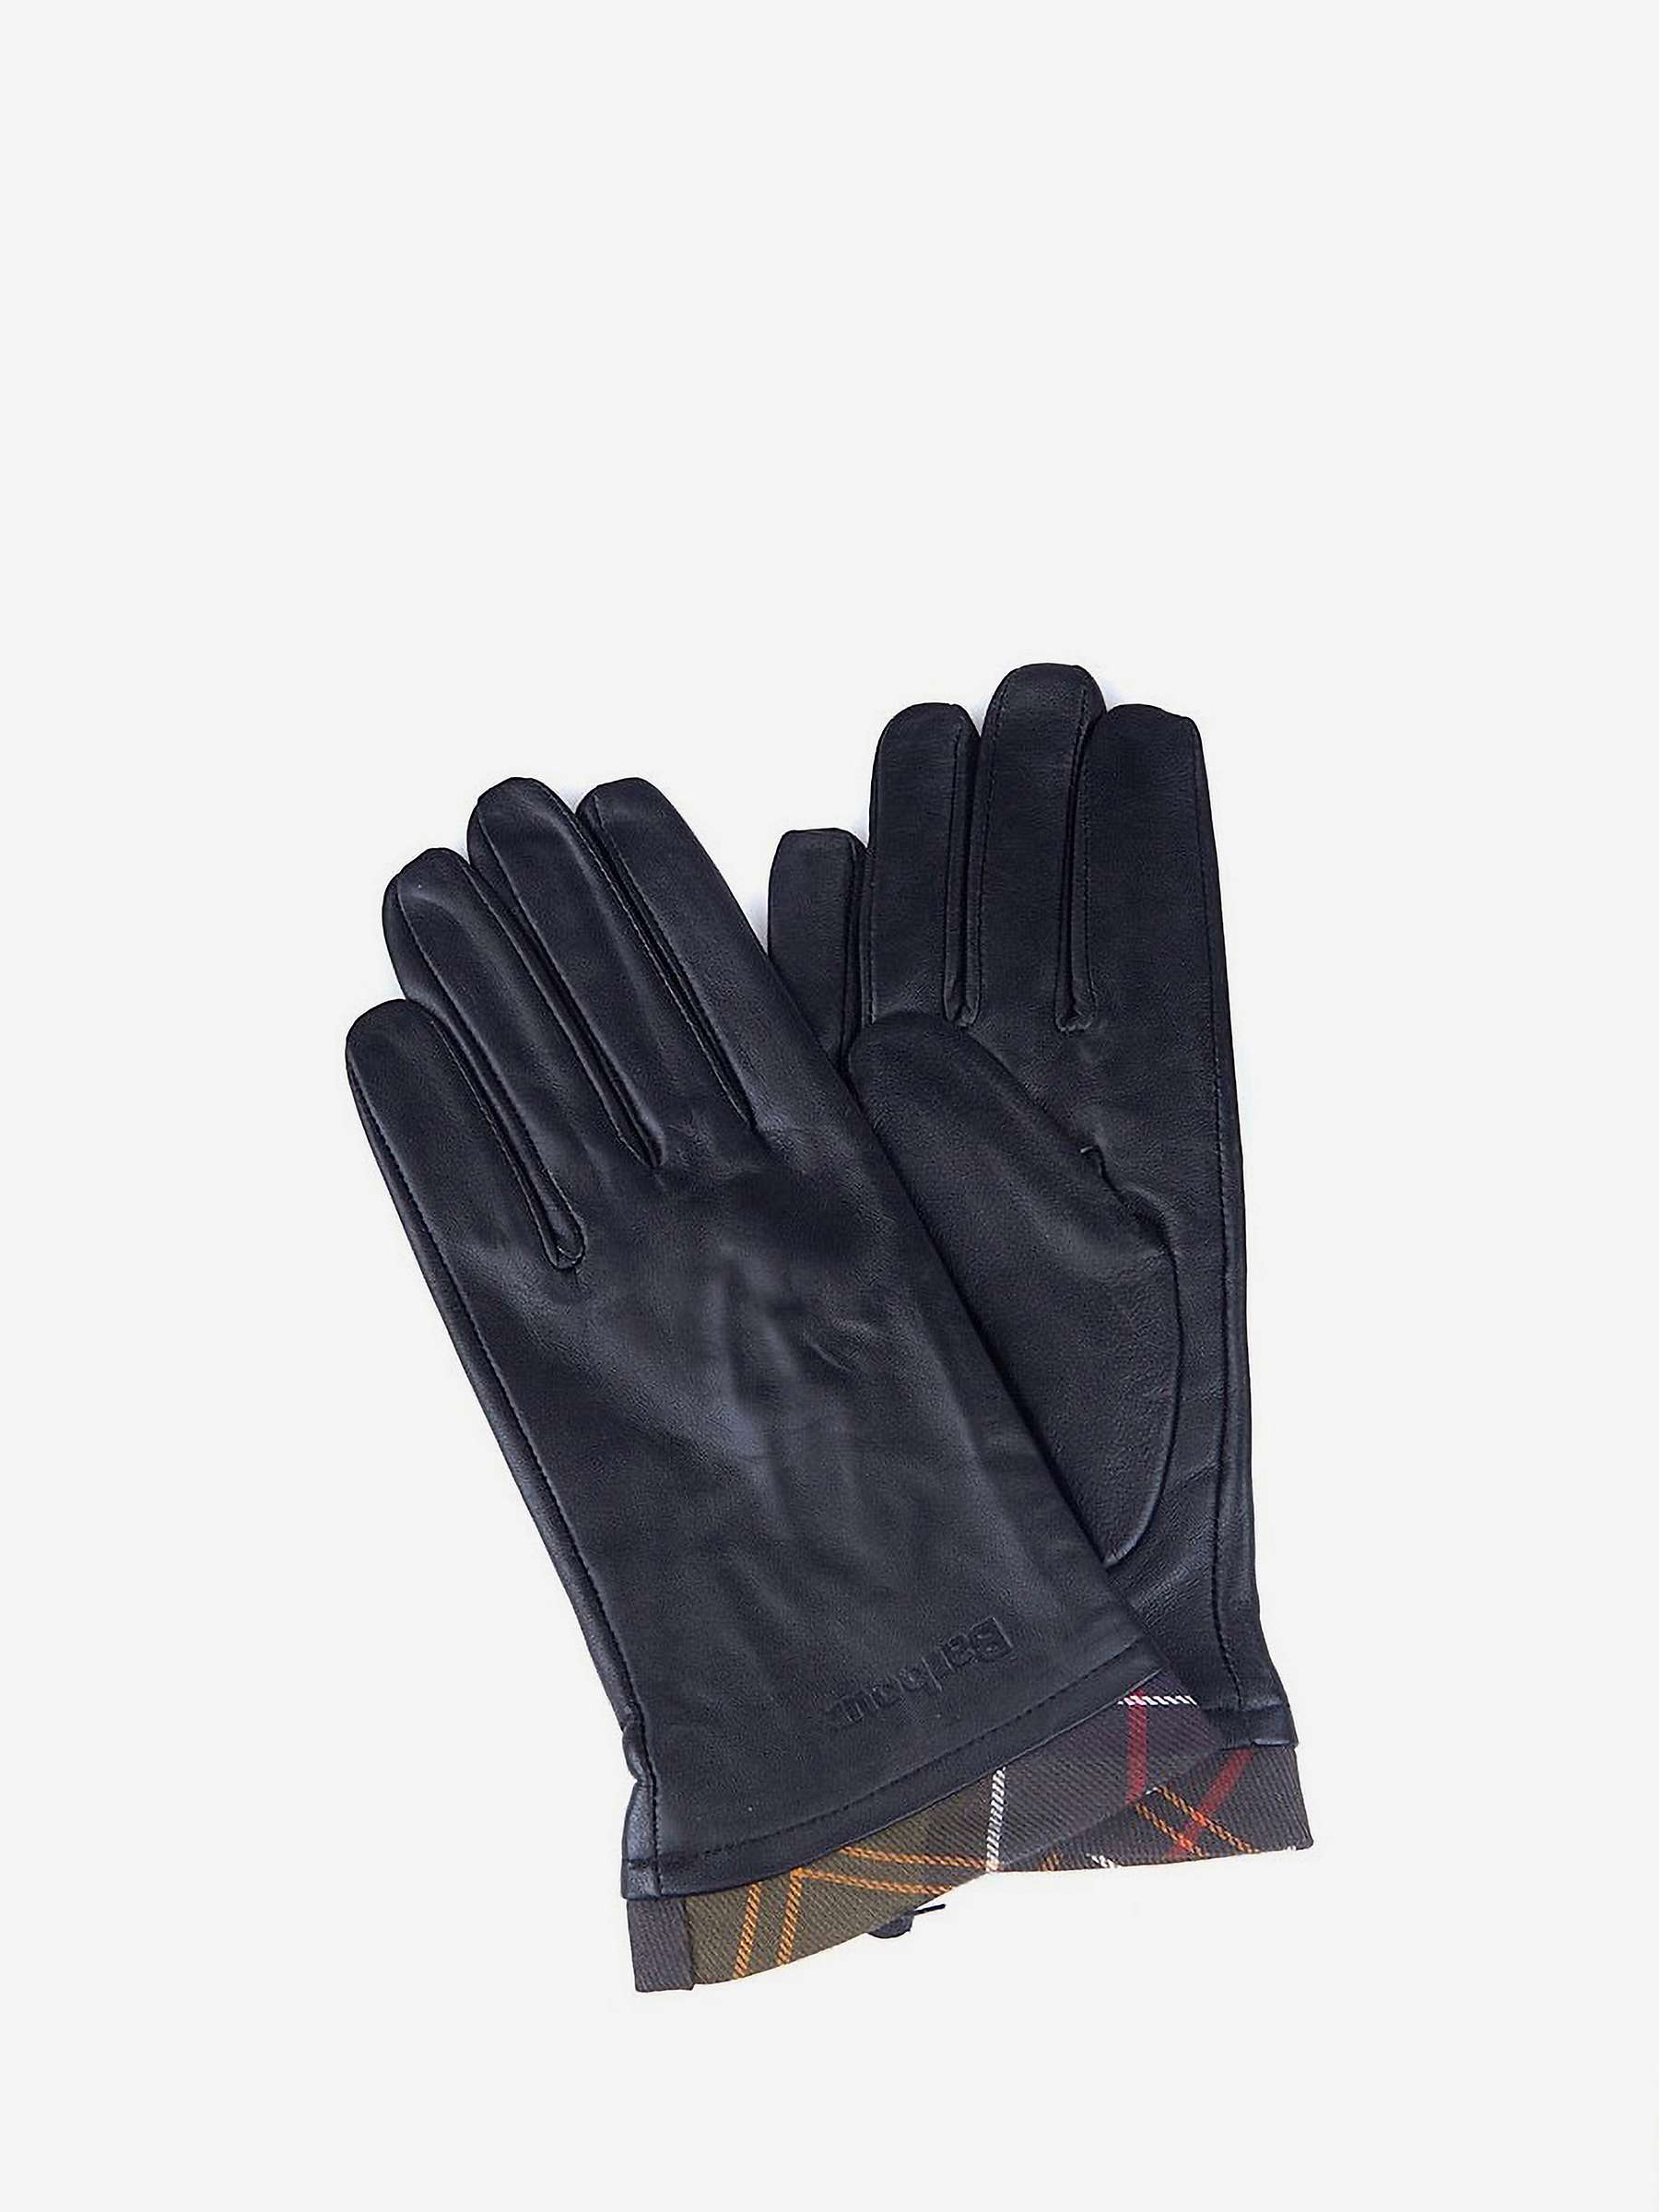 Barbour Classic Tartan Trim Leather Gloves, Black, Black at John Lewis ...